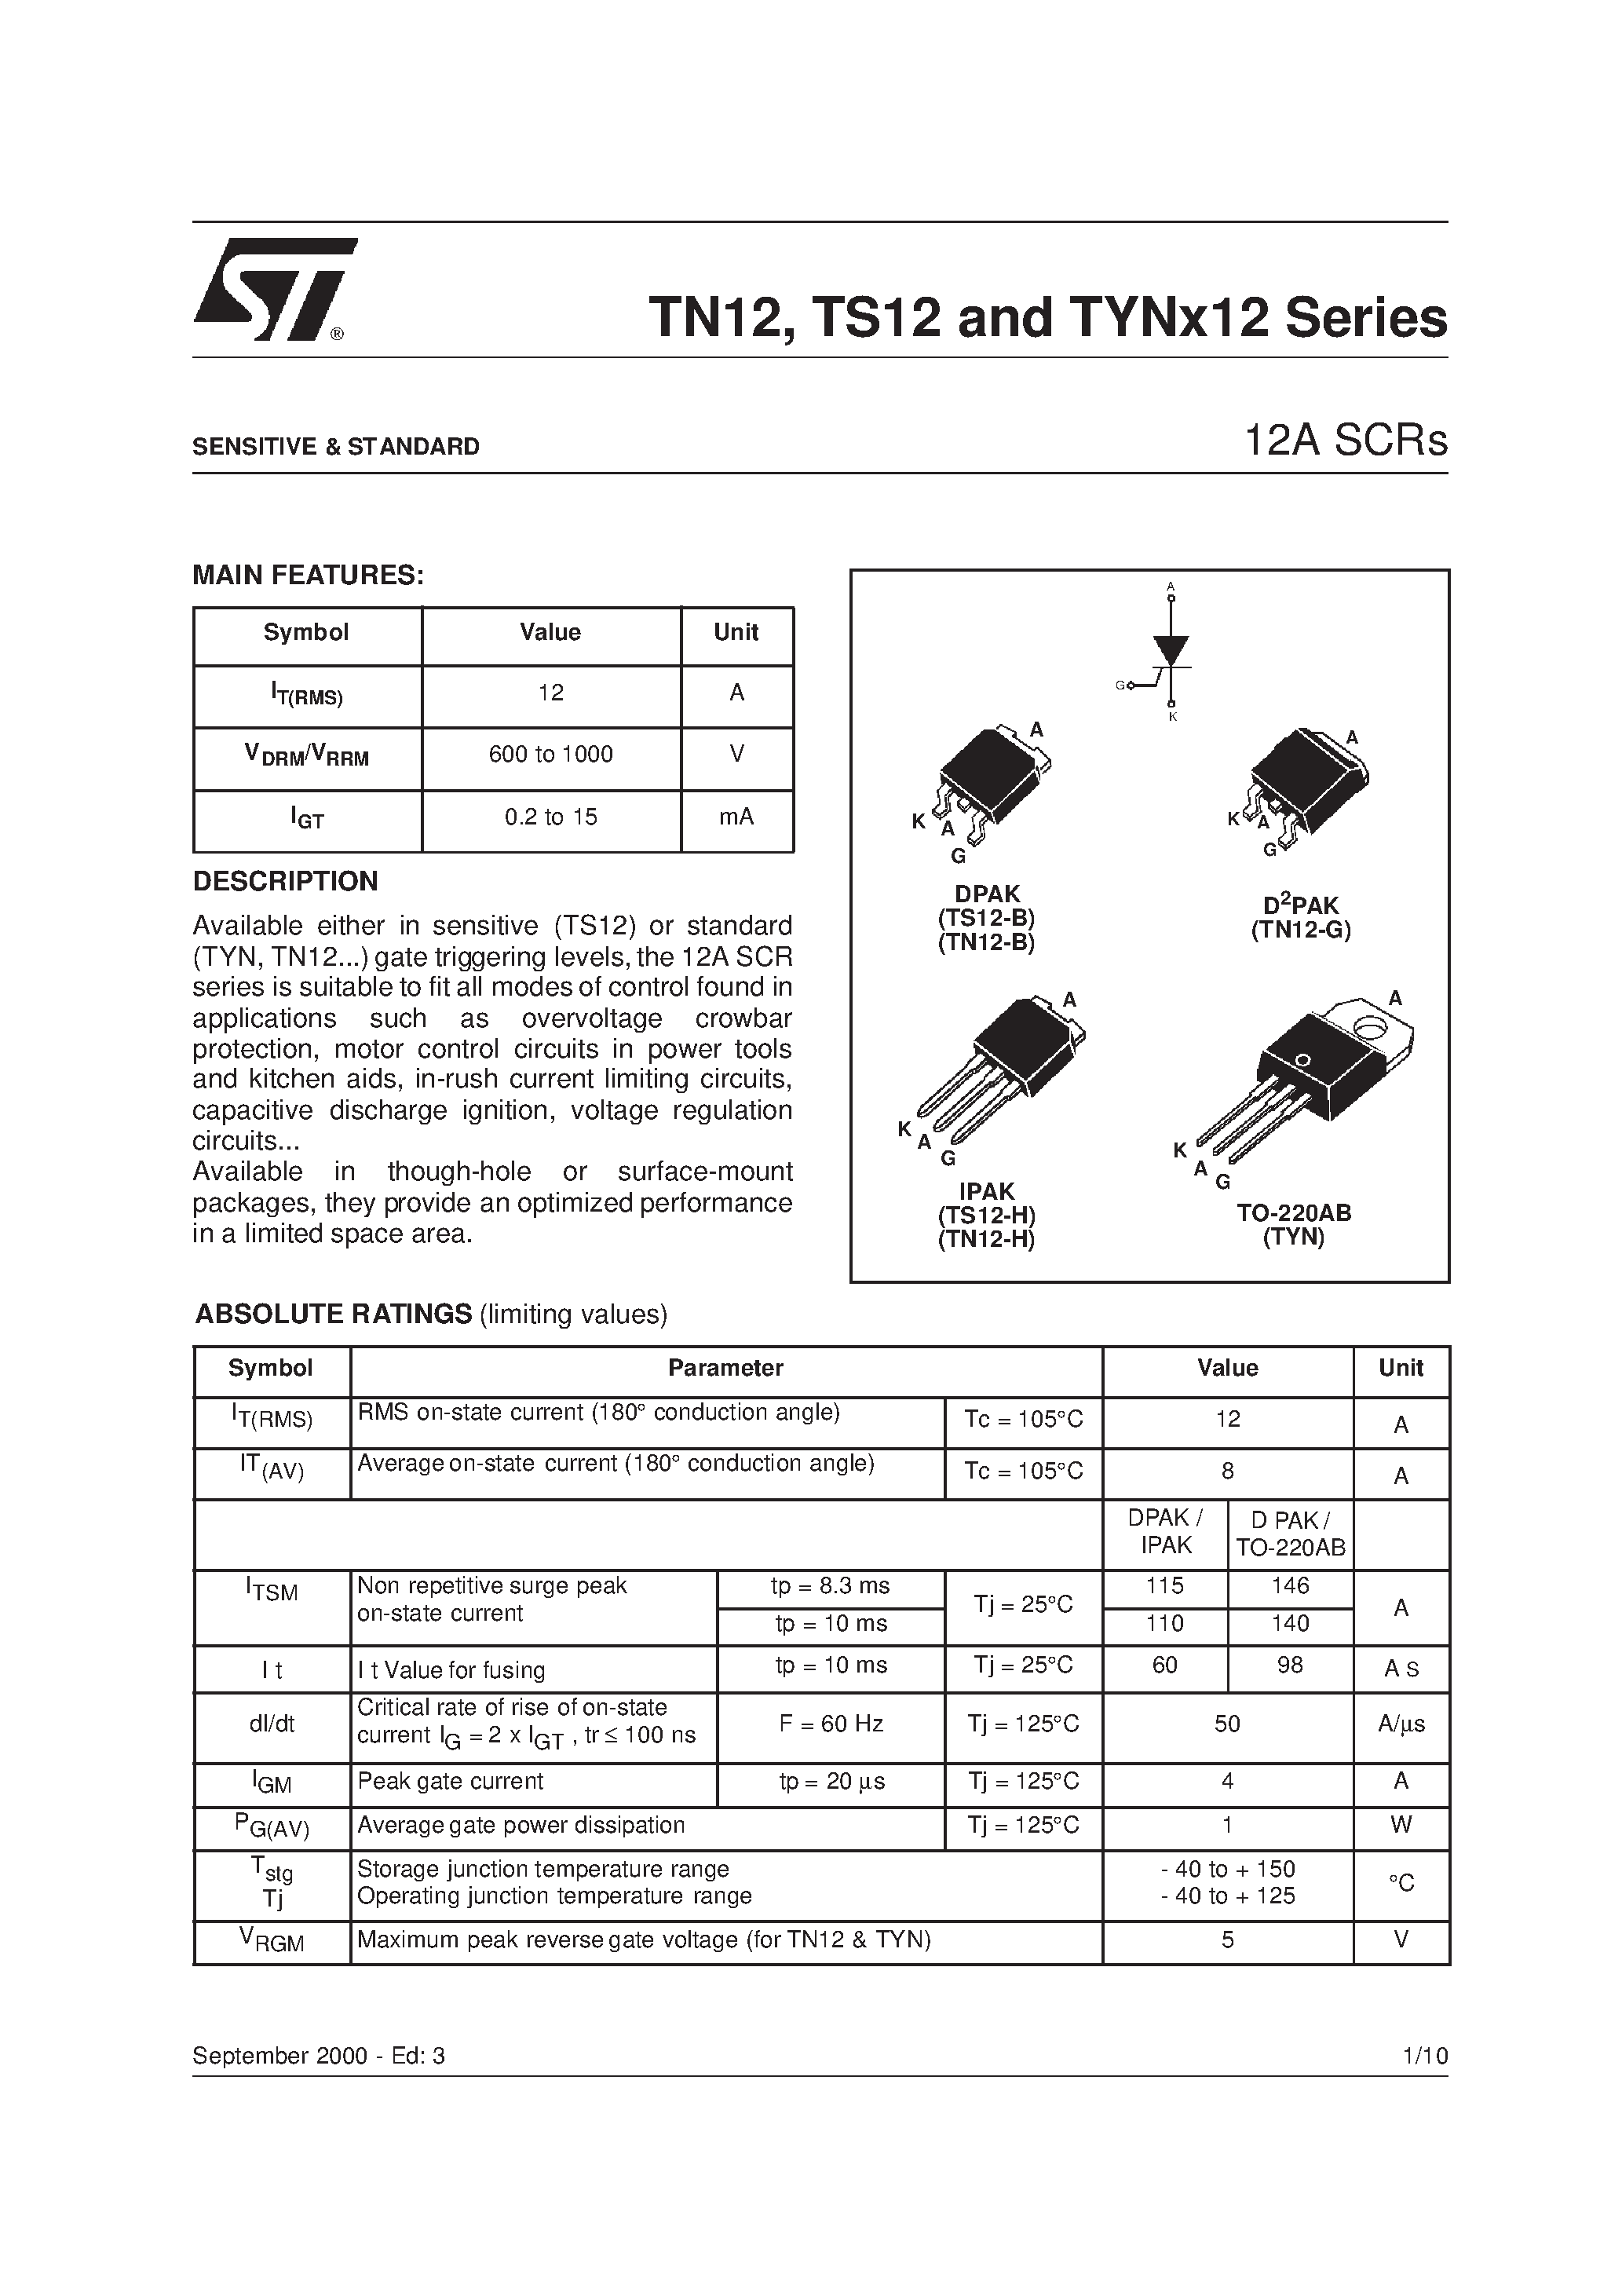 Datasheet TYN80012 - SENSITIVE & STANDARD(12A SCRs) page 1